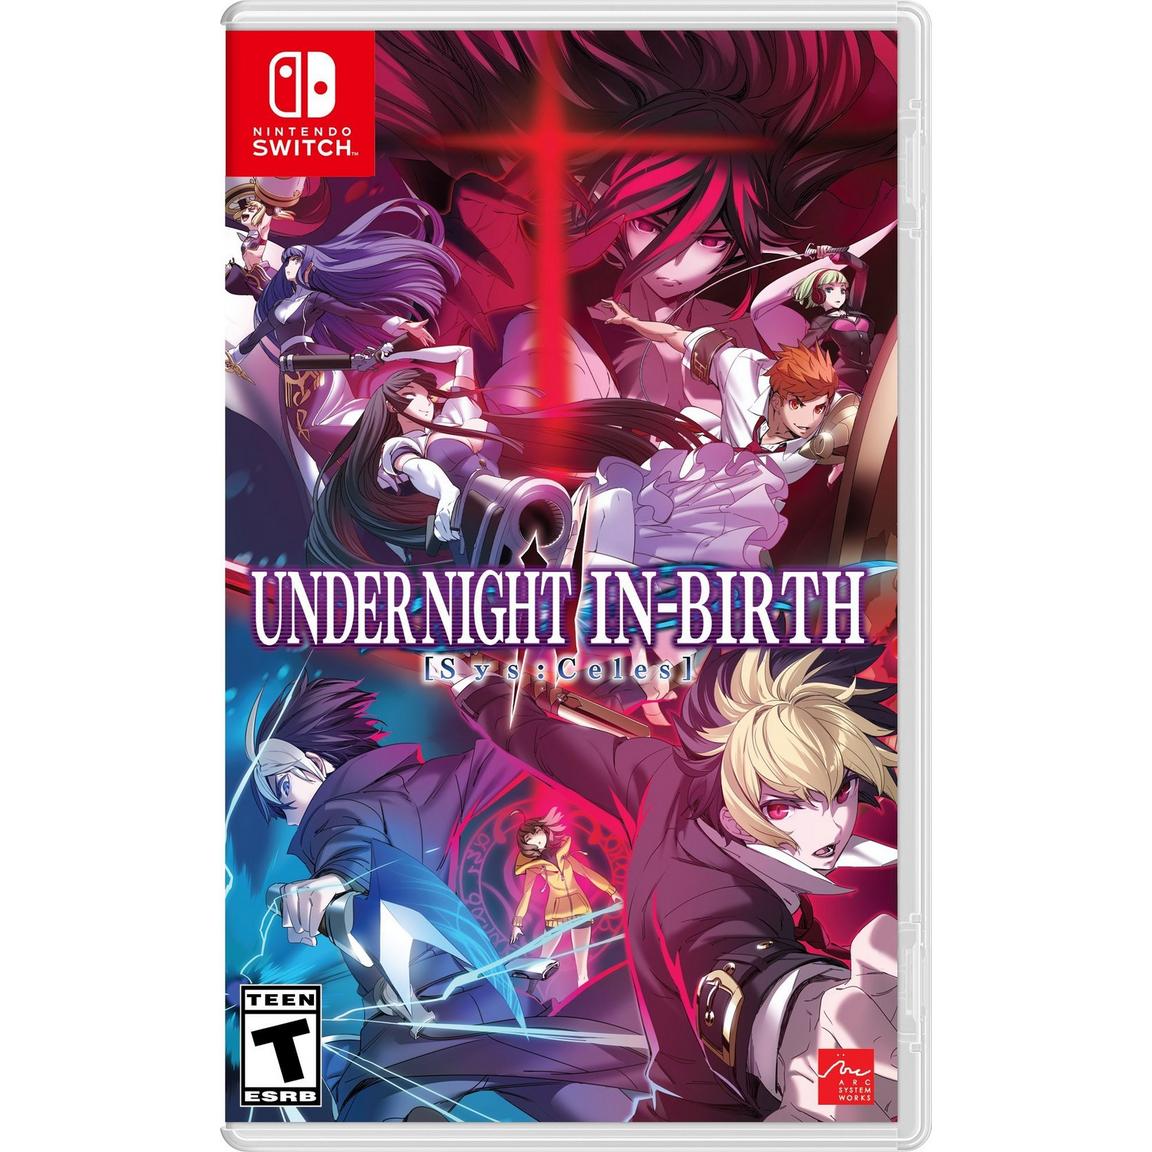 Видеоигра UNDER NIGHT IN-BIRTH II [Sys:Celes] - Nintendo Switch